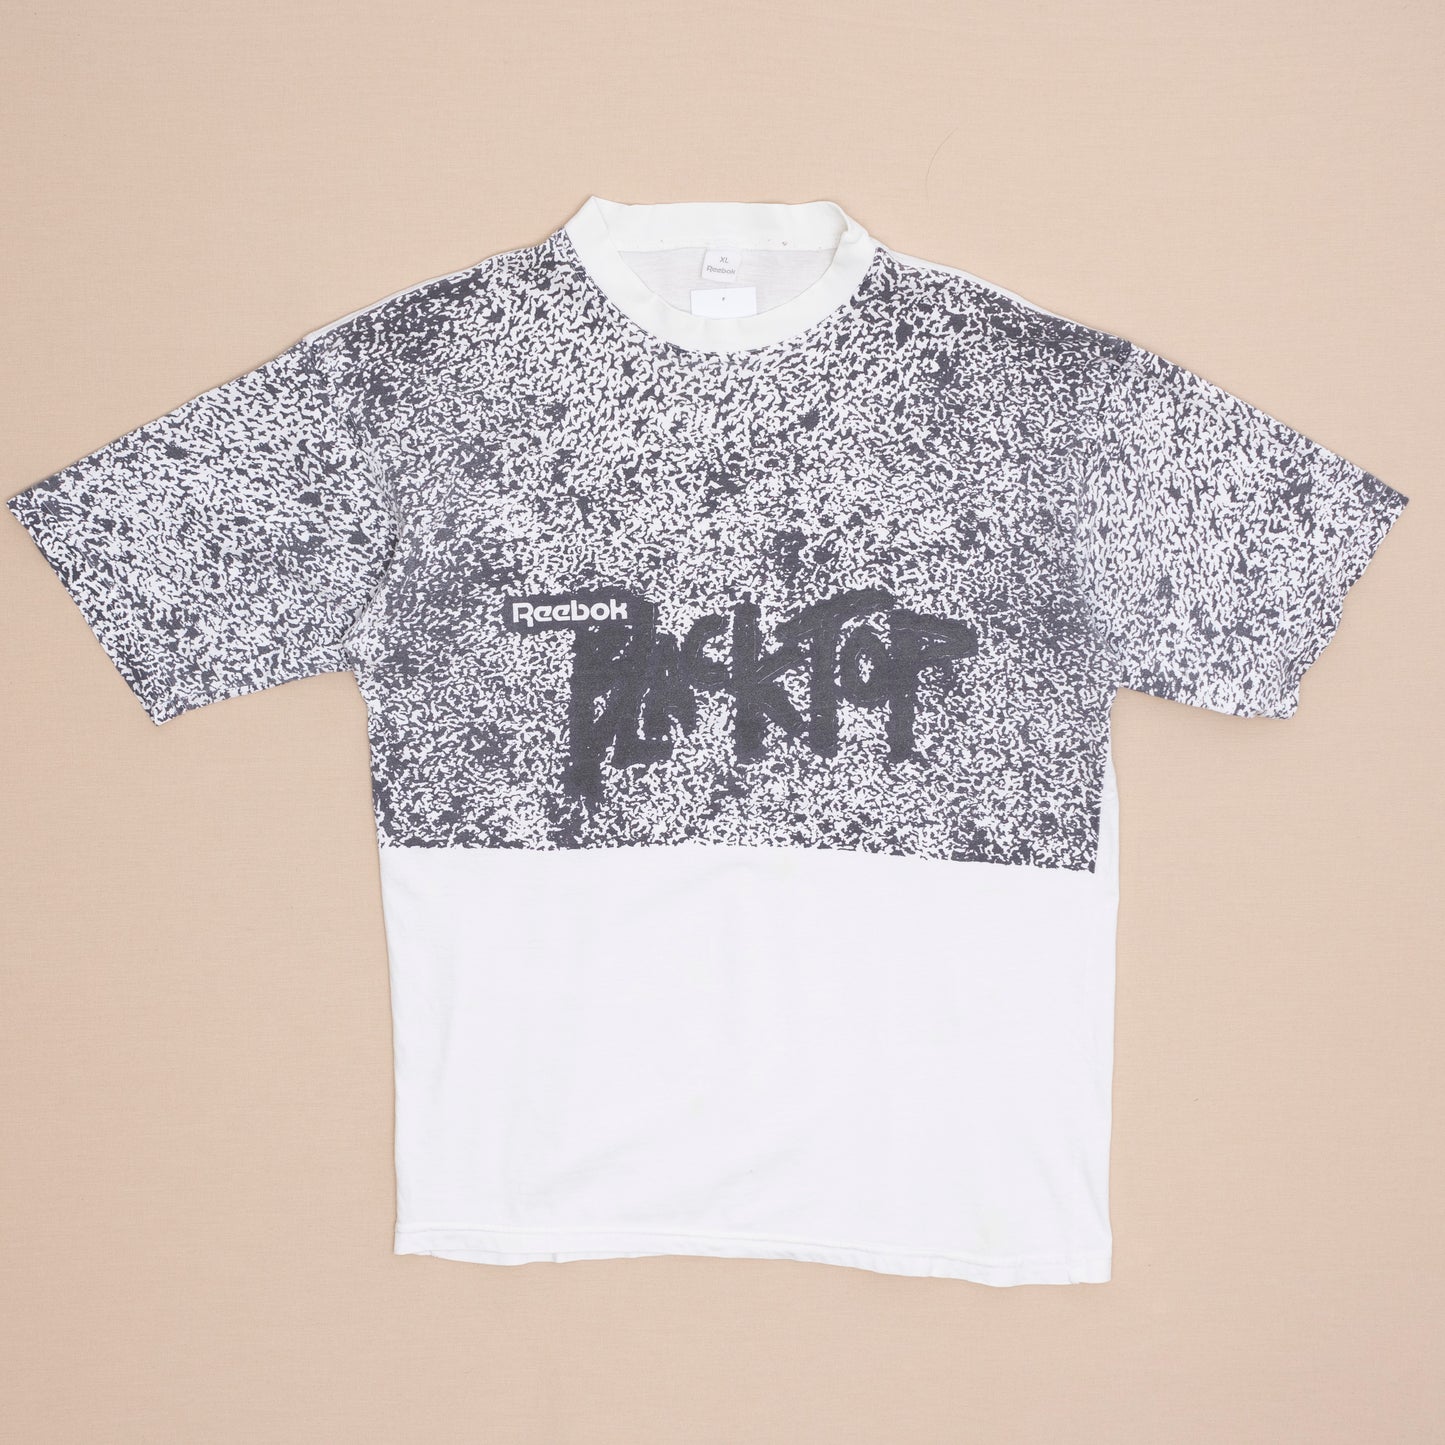 Reebok Blacktop T Shirt, L